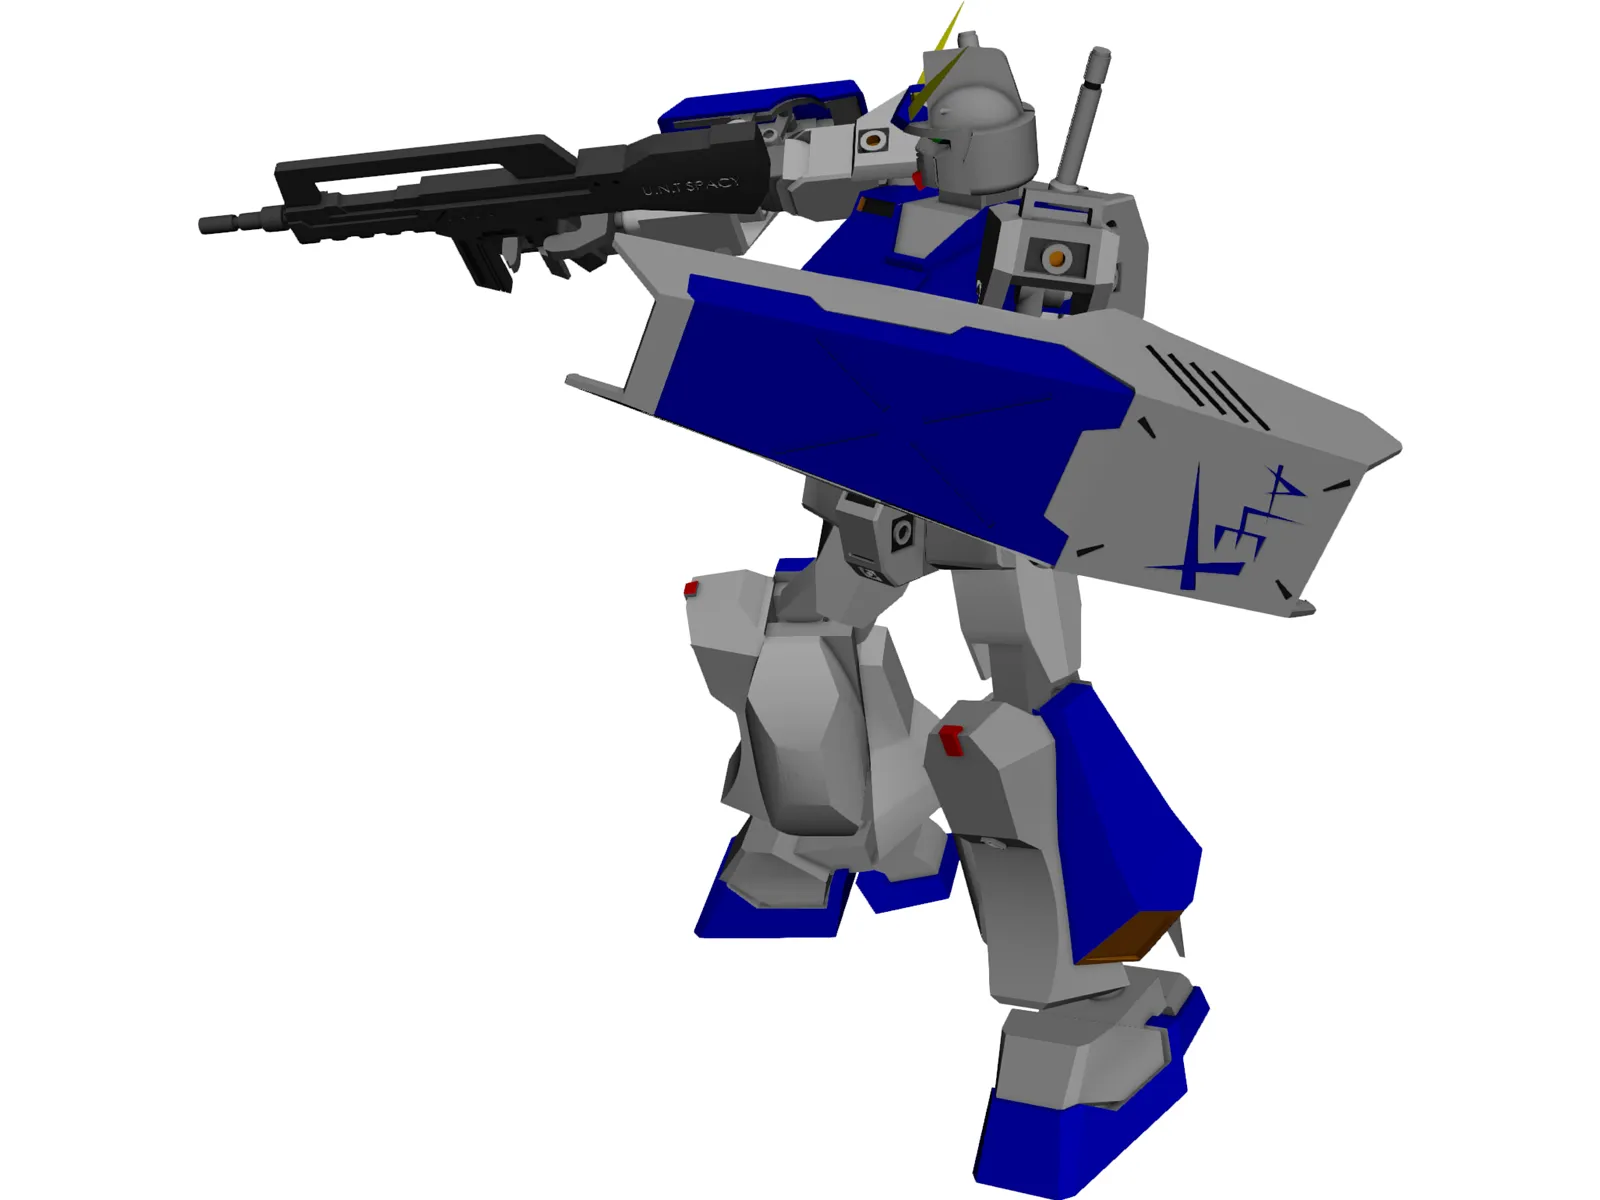 Gundam Alex RX-78 NT-1 3D Model